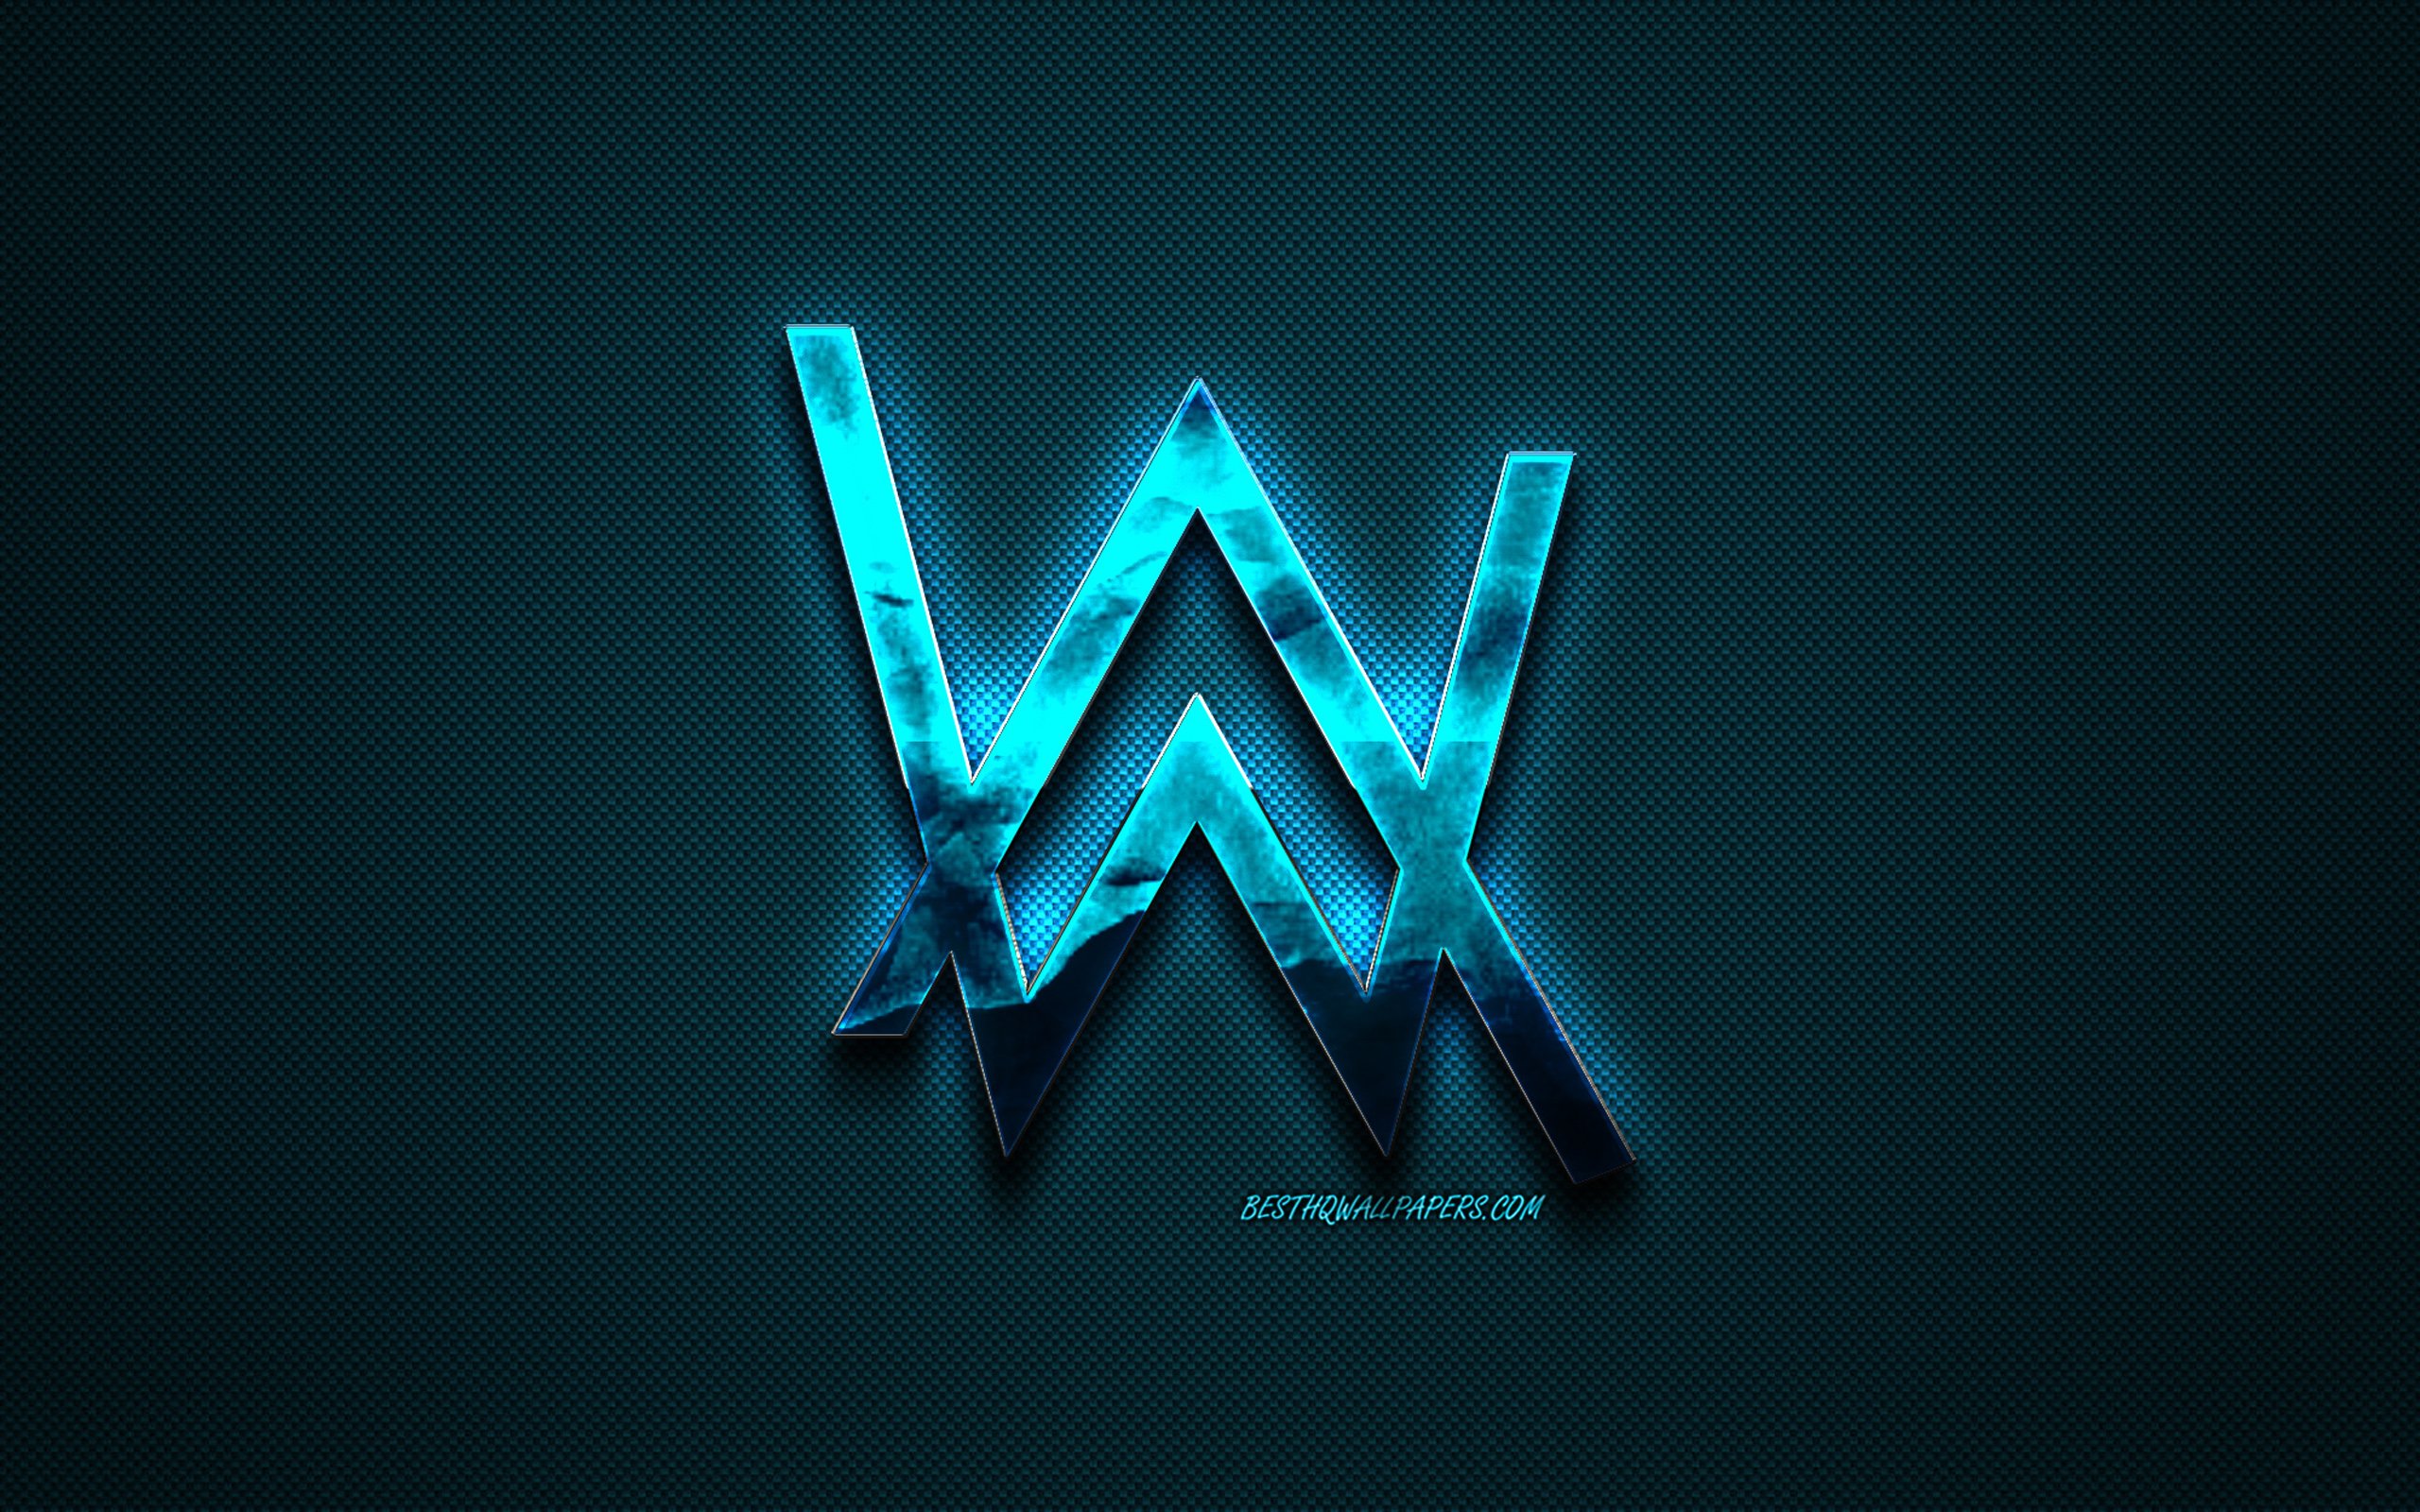 Download wallpaper Alan Walker logo, blue creative logo, Dutch DJ